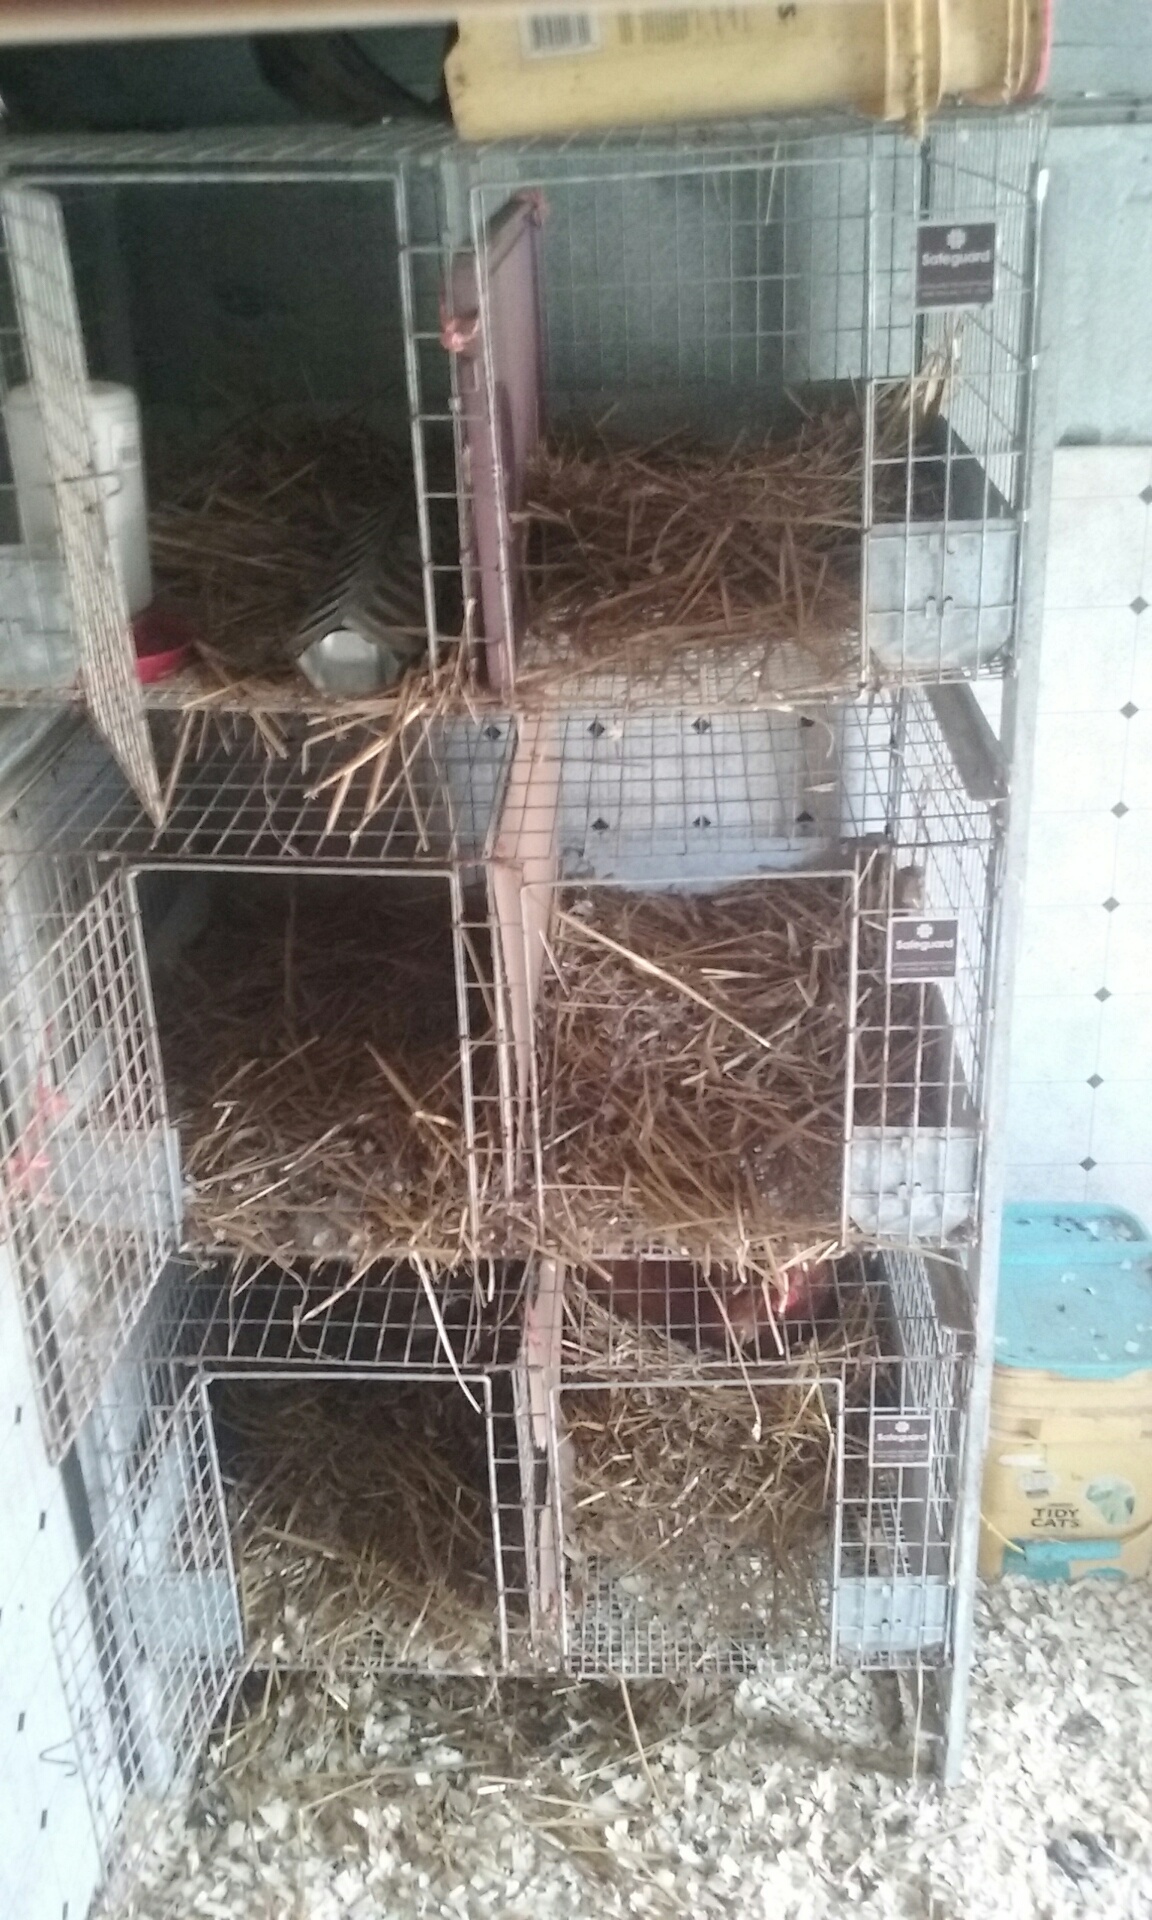 Nesting boxes